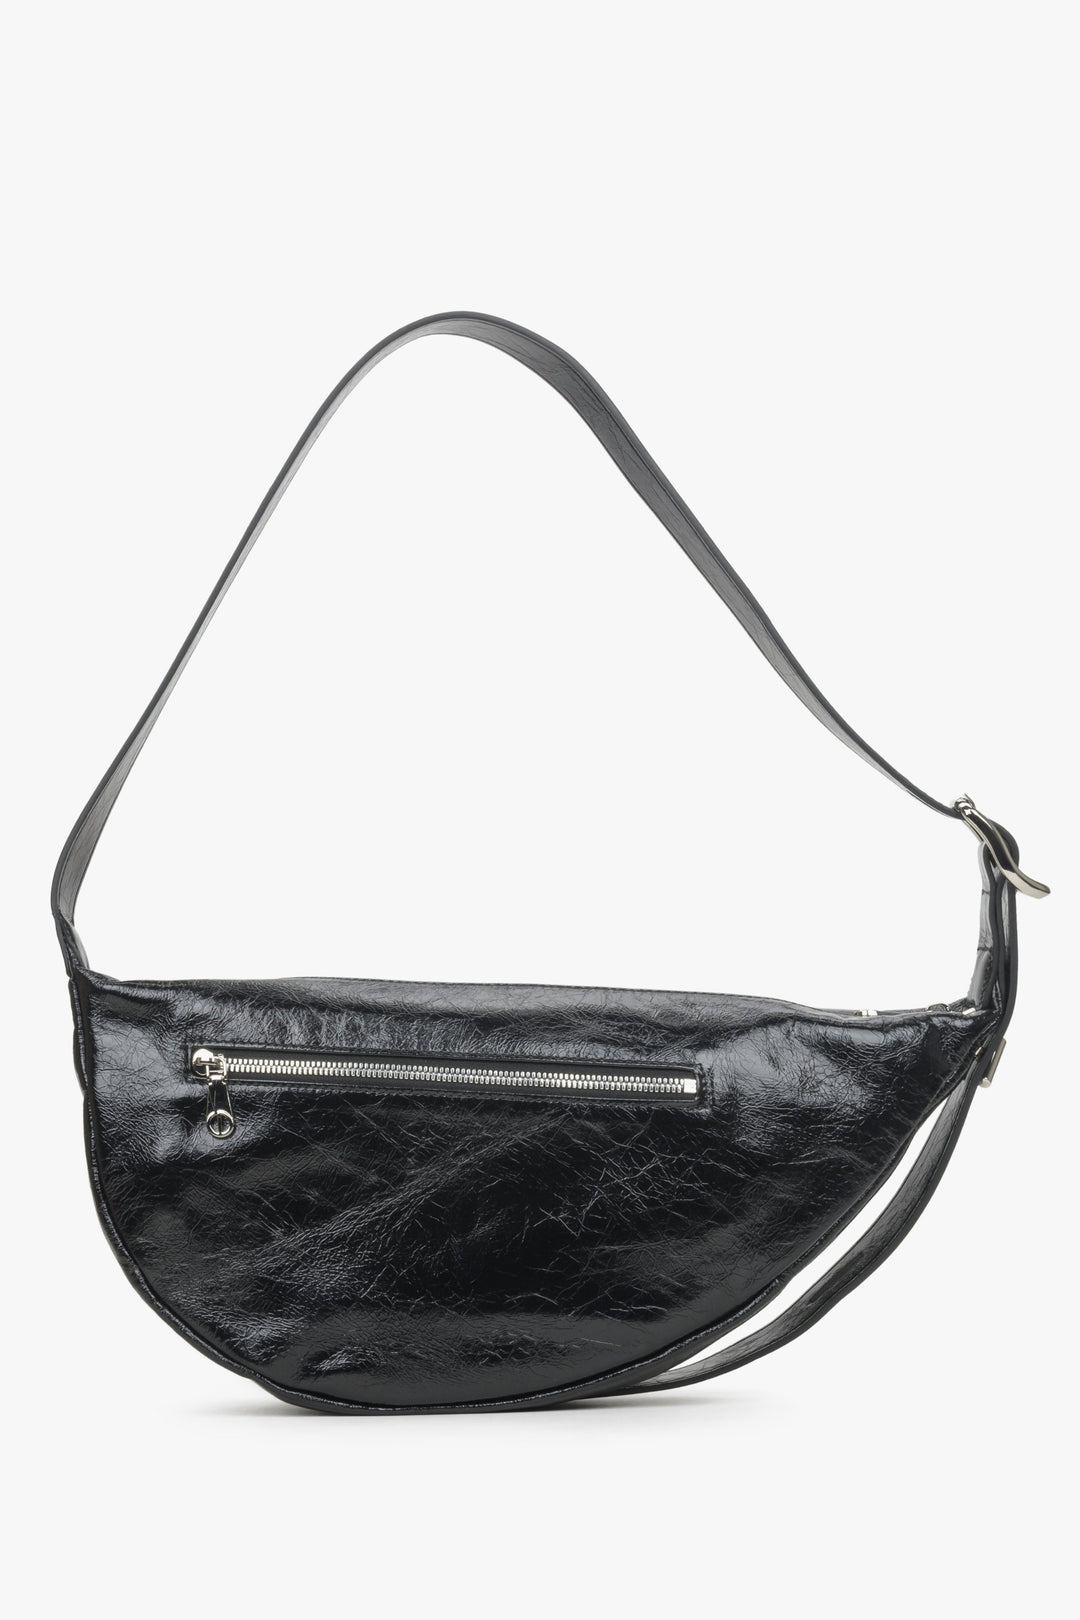 Women's black patent leather  Estro shoulder bag - back view of the model.